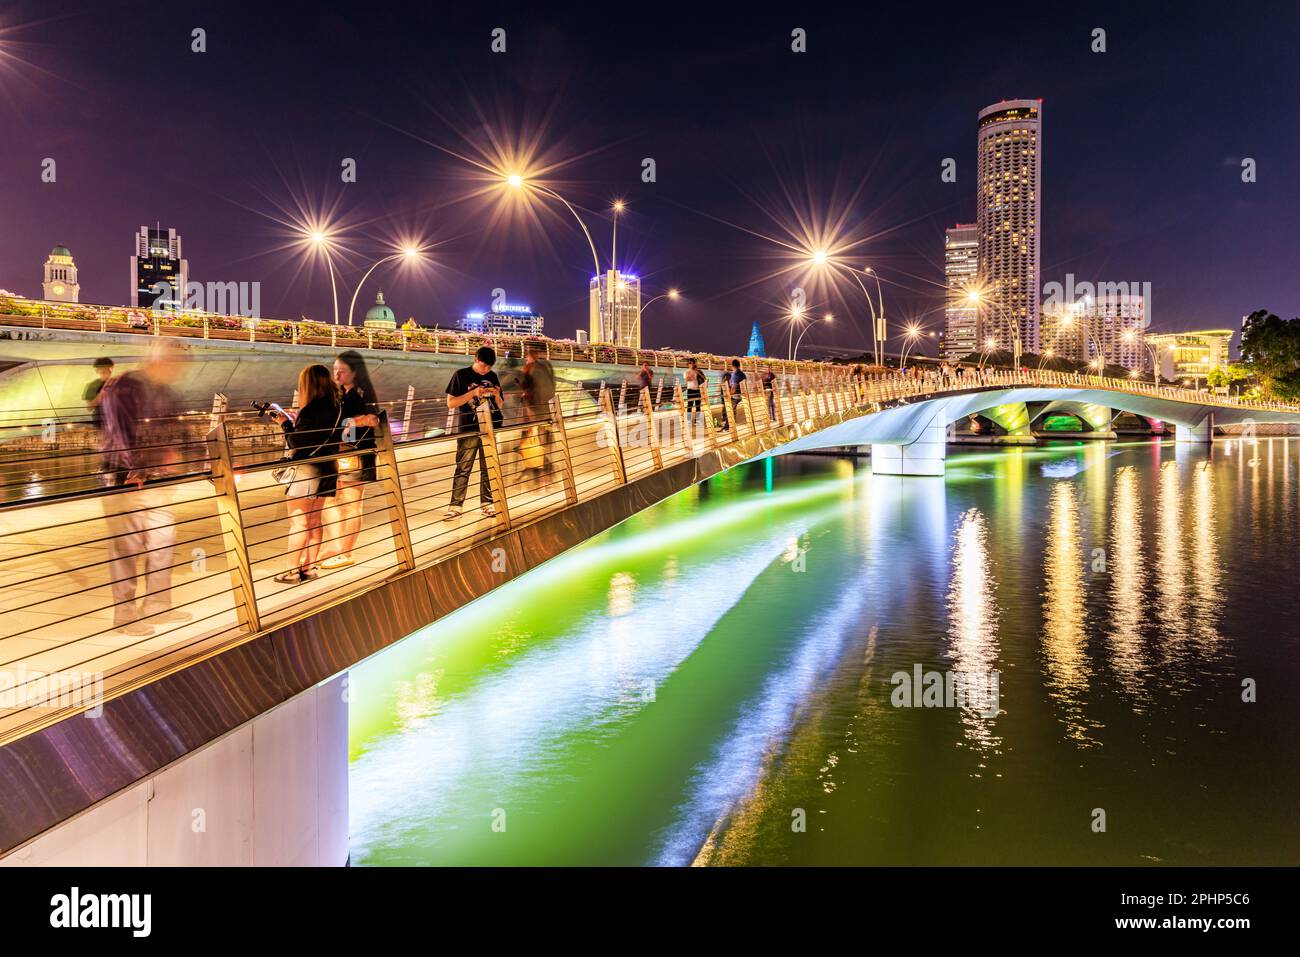 Jubilee Bridge and the Esplanade at night, Singapore Stock Photo